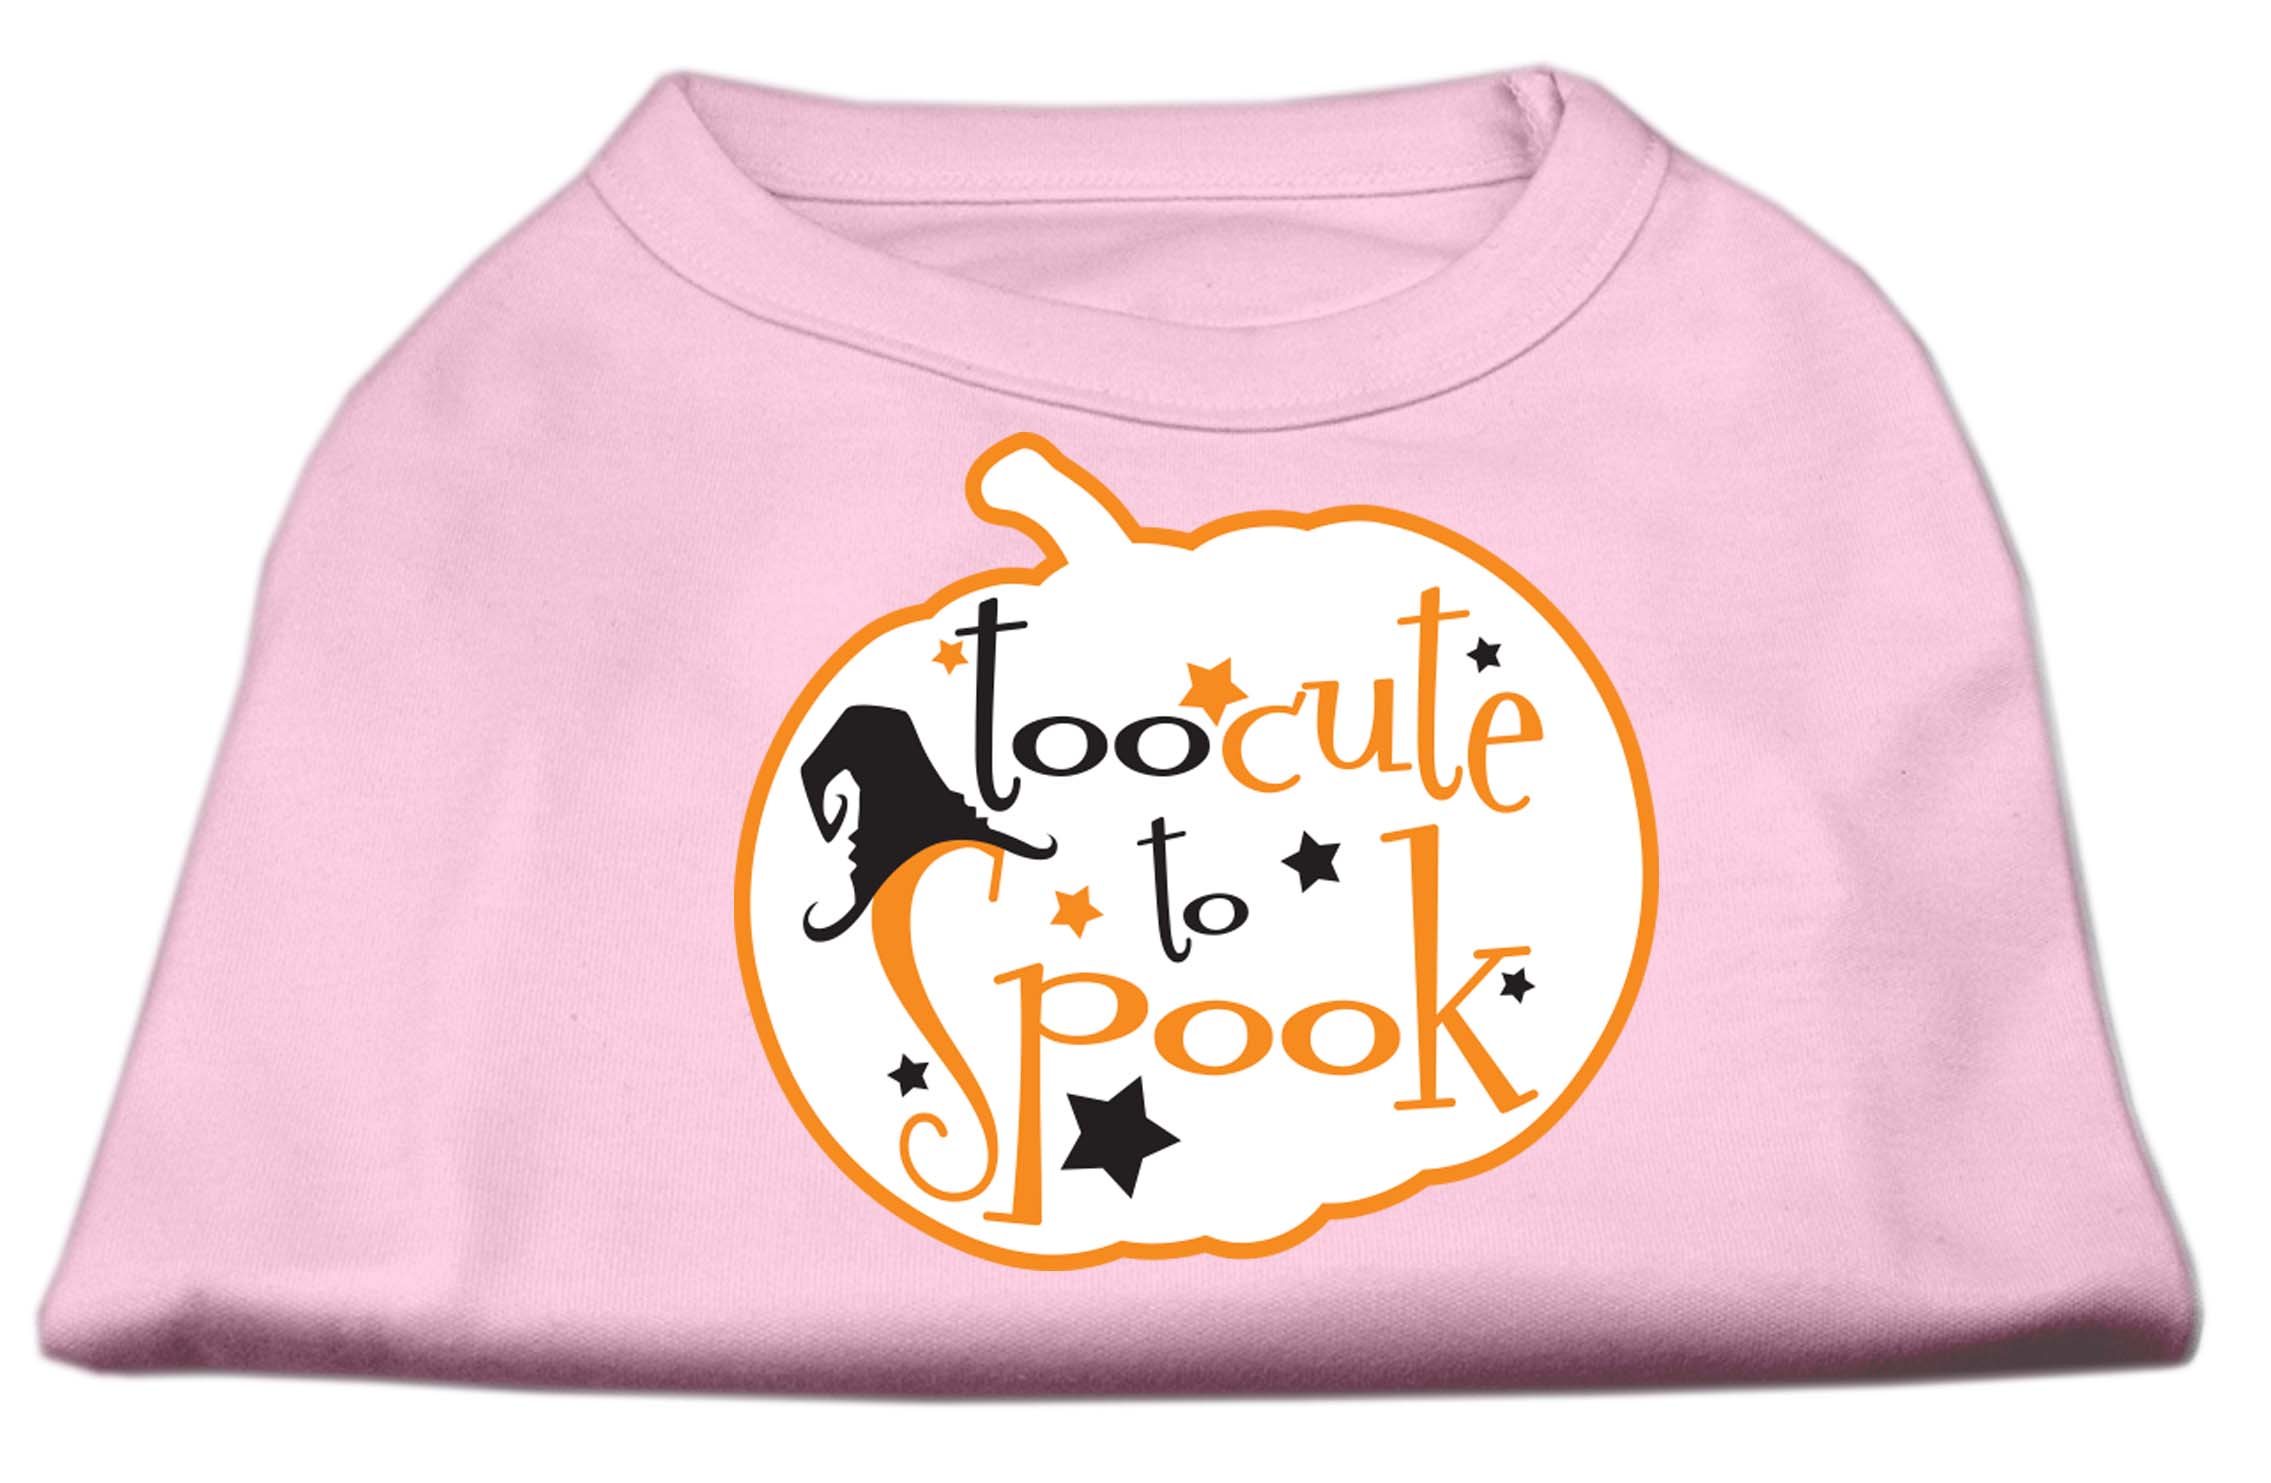 Too Cute to Spook Screen Print Dog Shirt Light Pink Sm